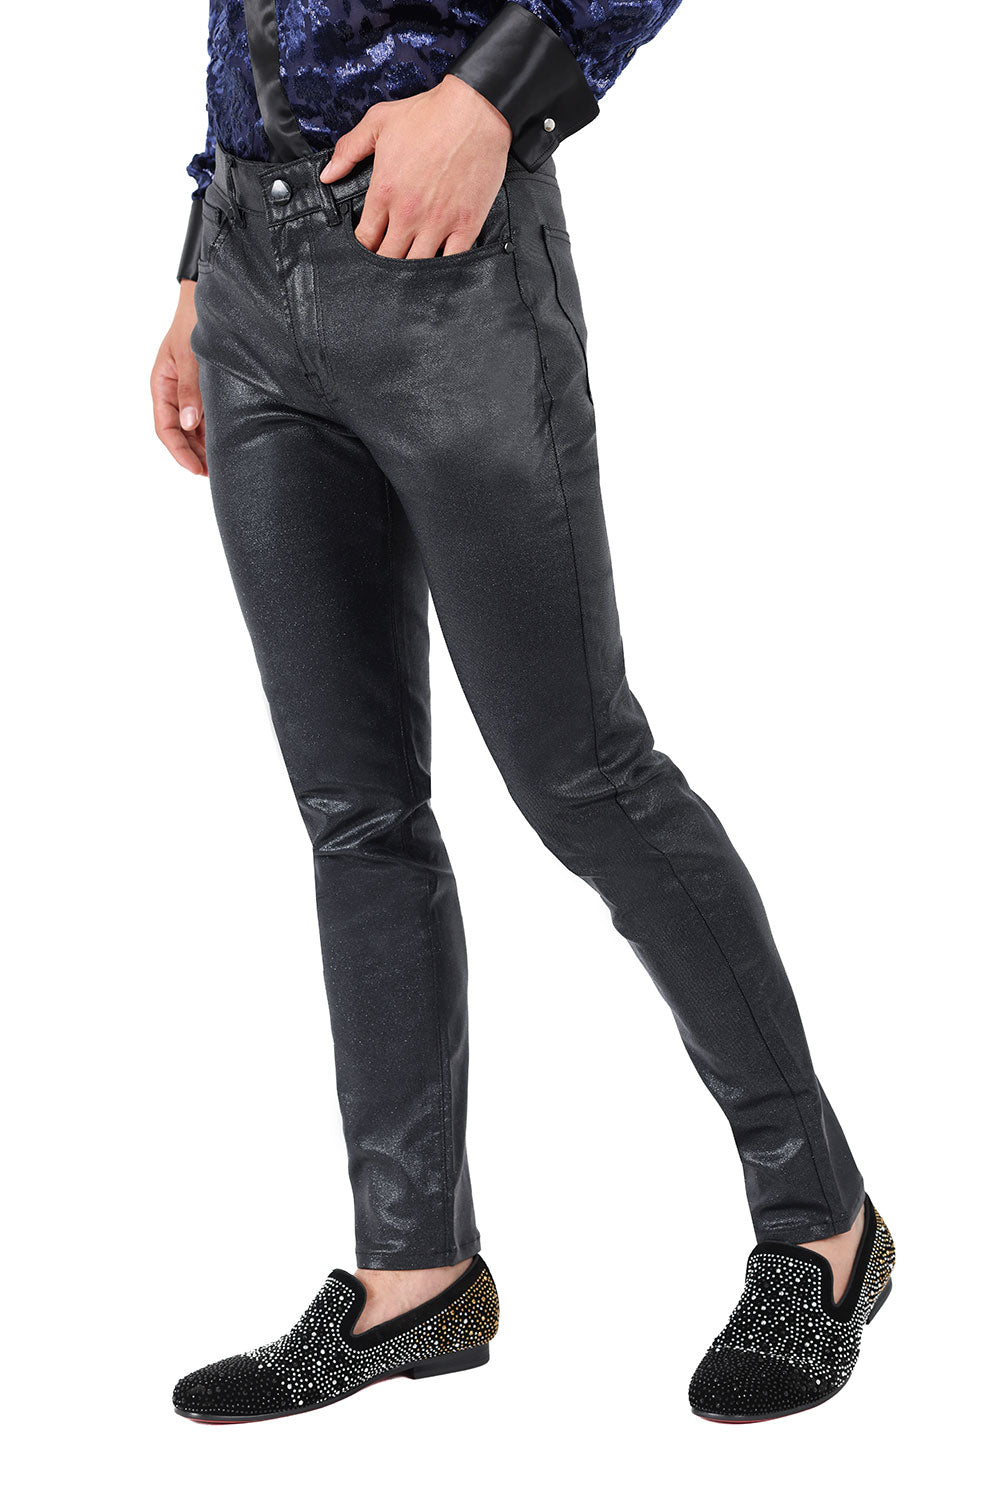 Barabas Men's Glossy Shiny Design Sparkly Luxury Dress Pants 2CPW27 Glitter Black